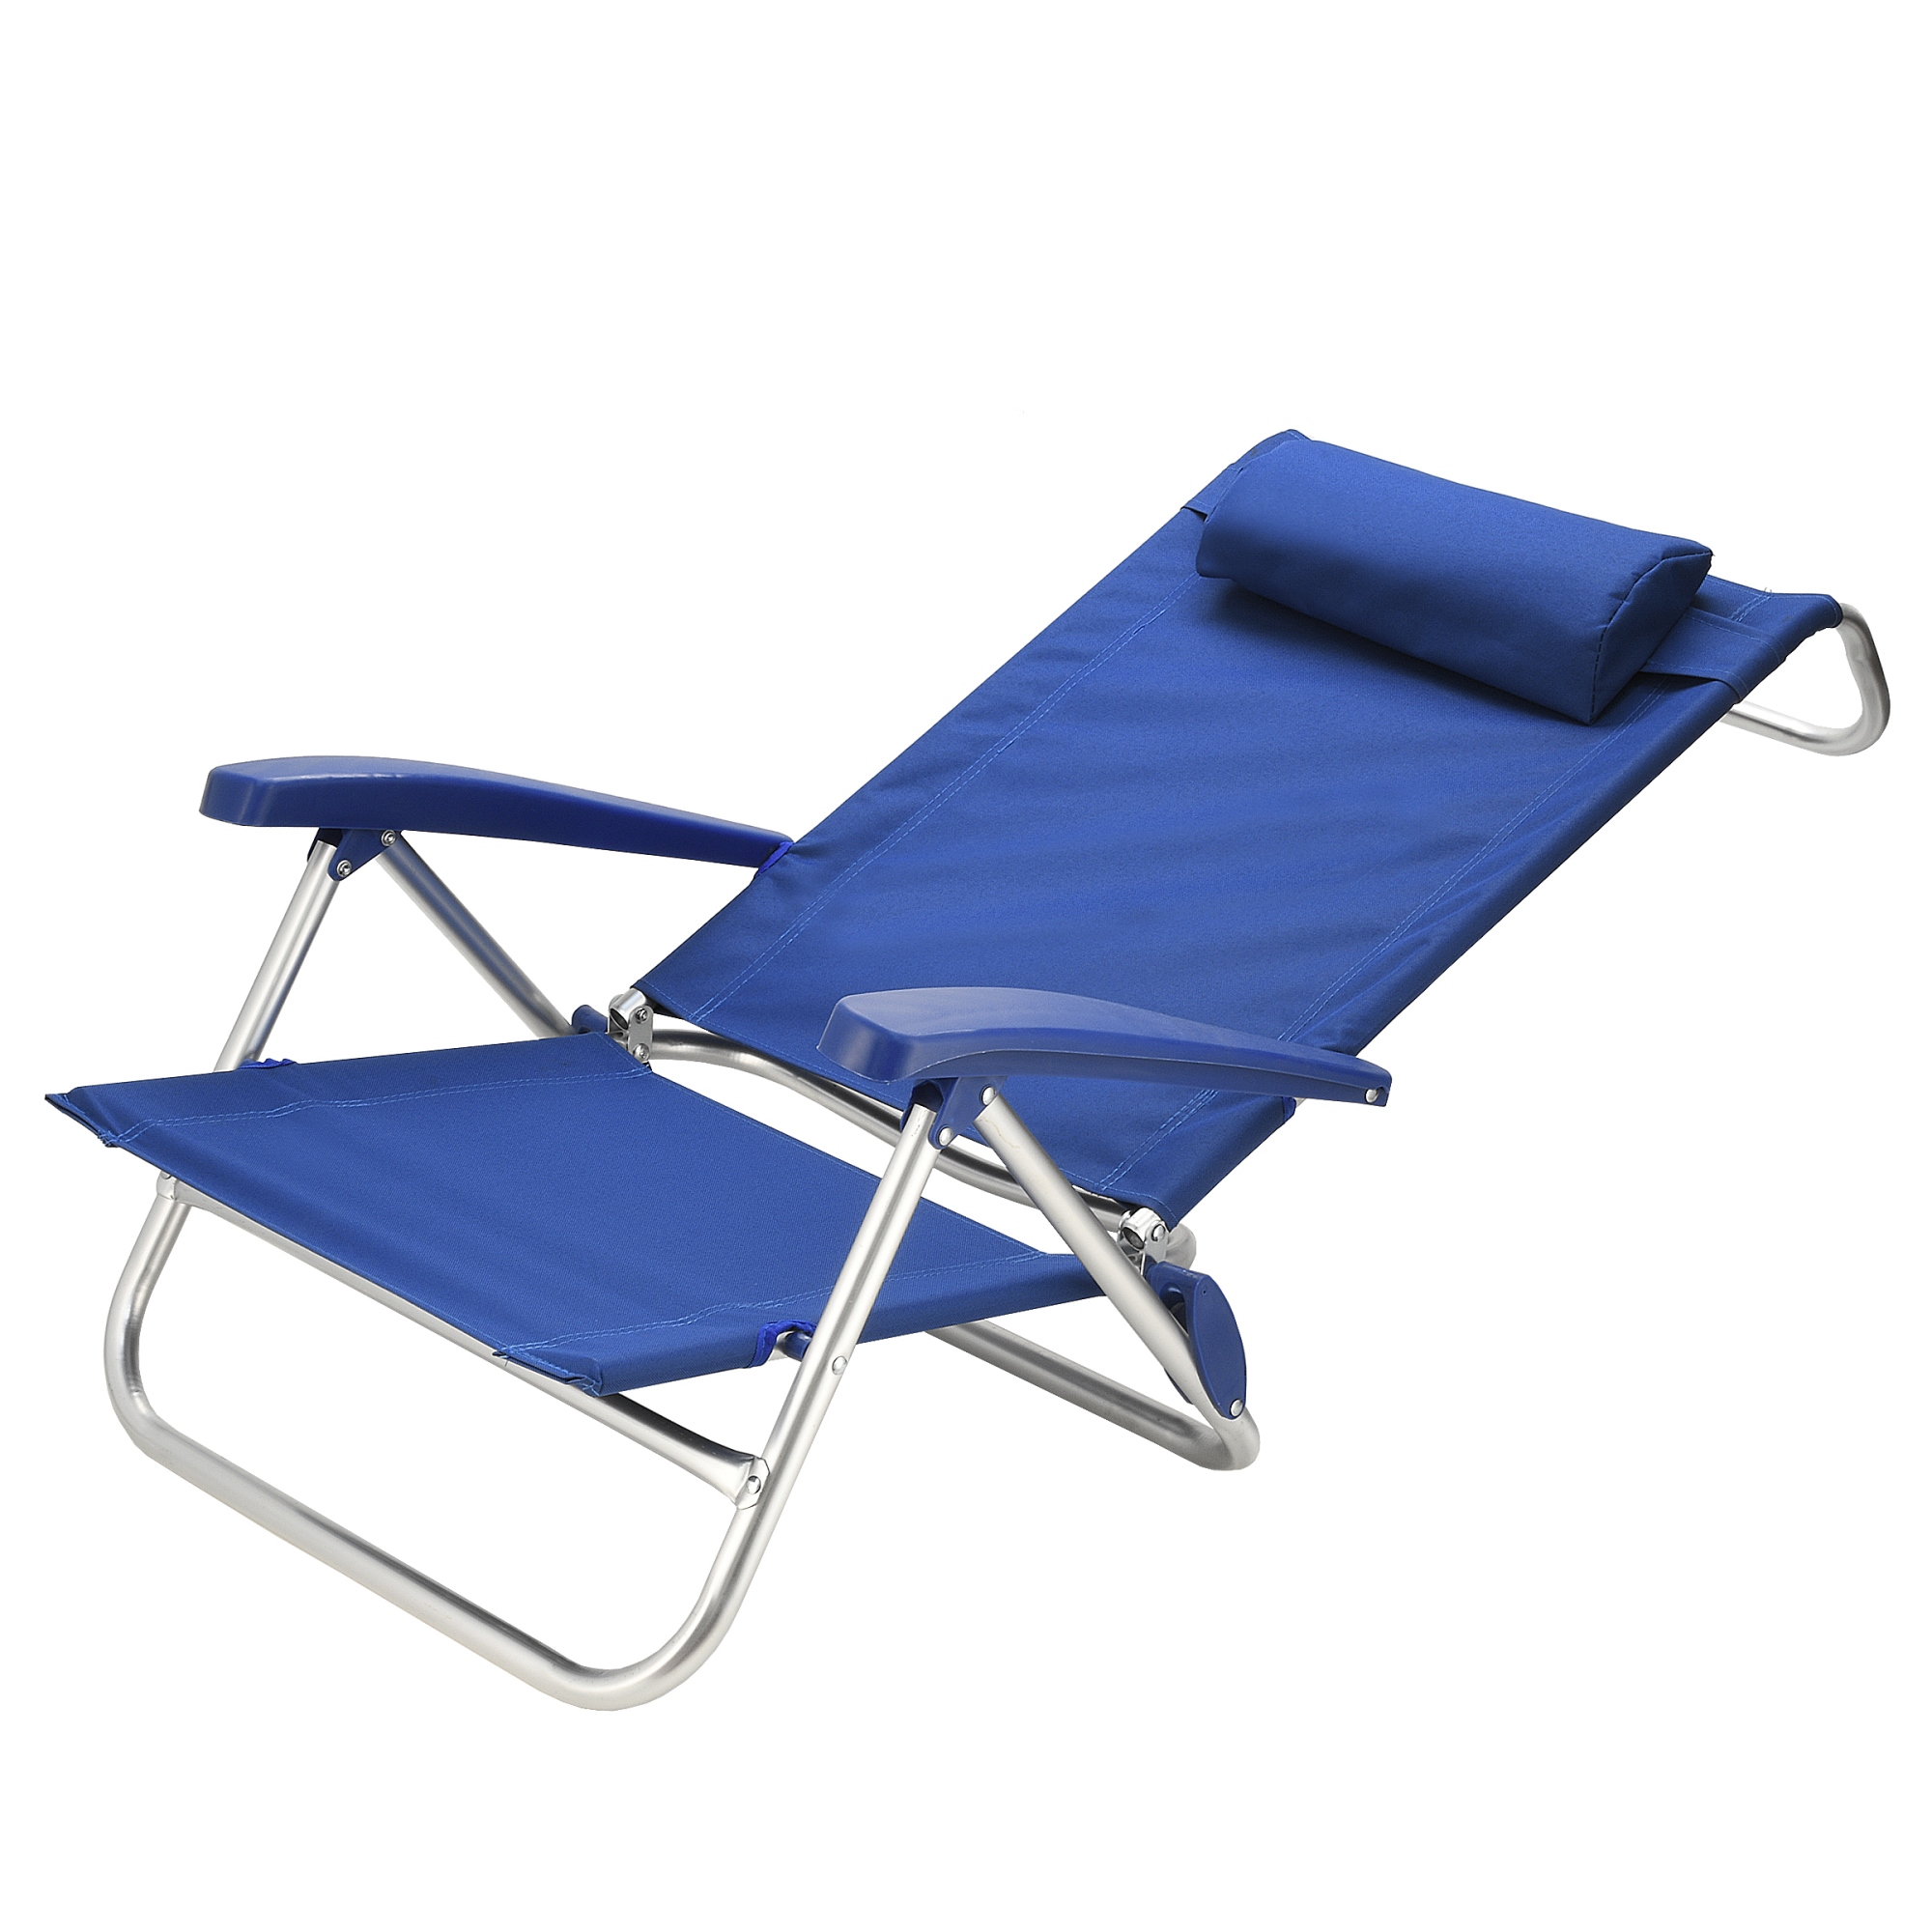 23" x 18.5" Cobalt Blue 5-Position Folding Beach Chair - image 3 of 3